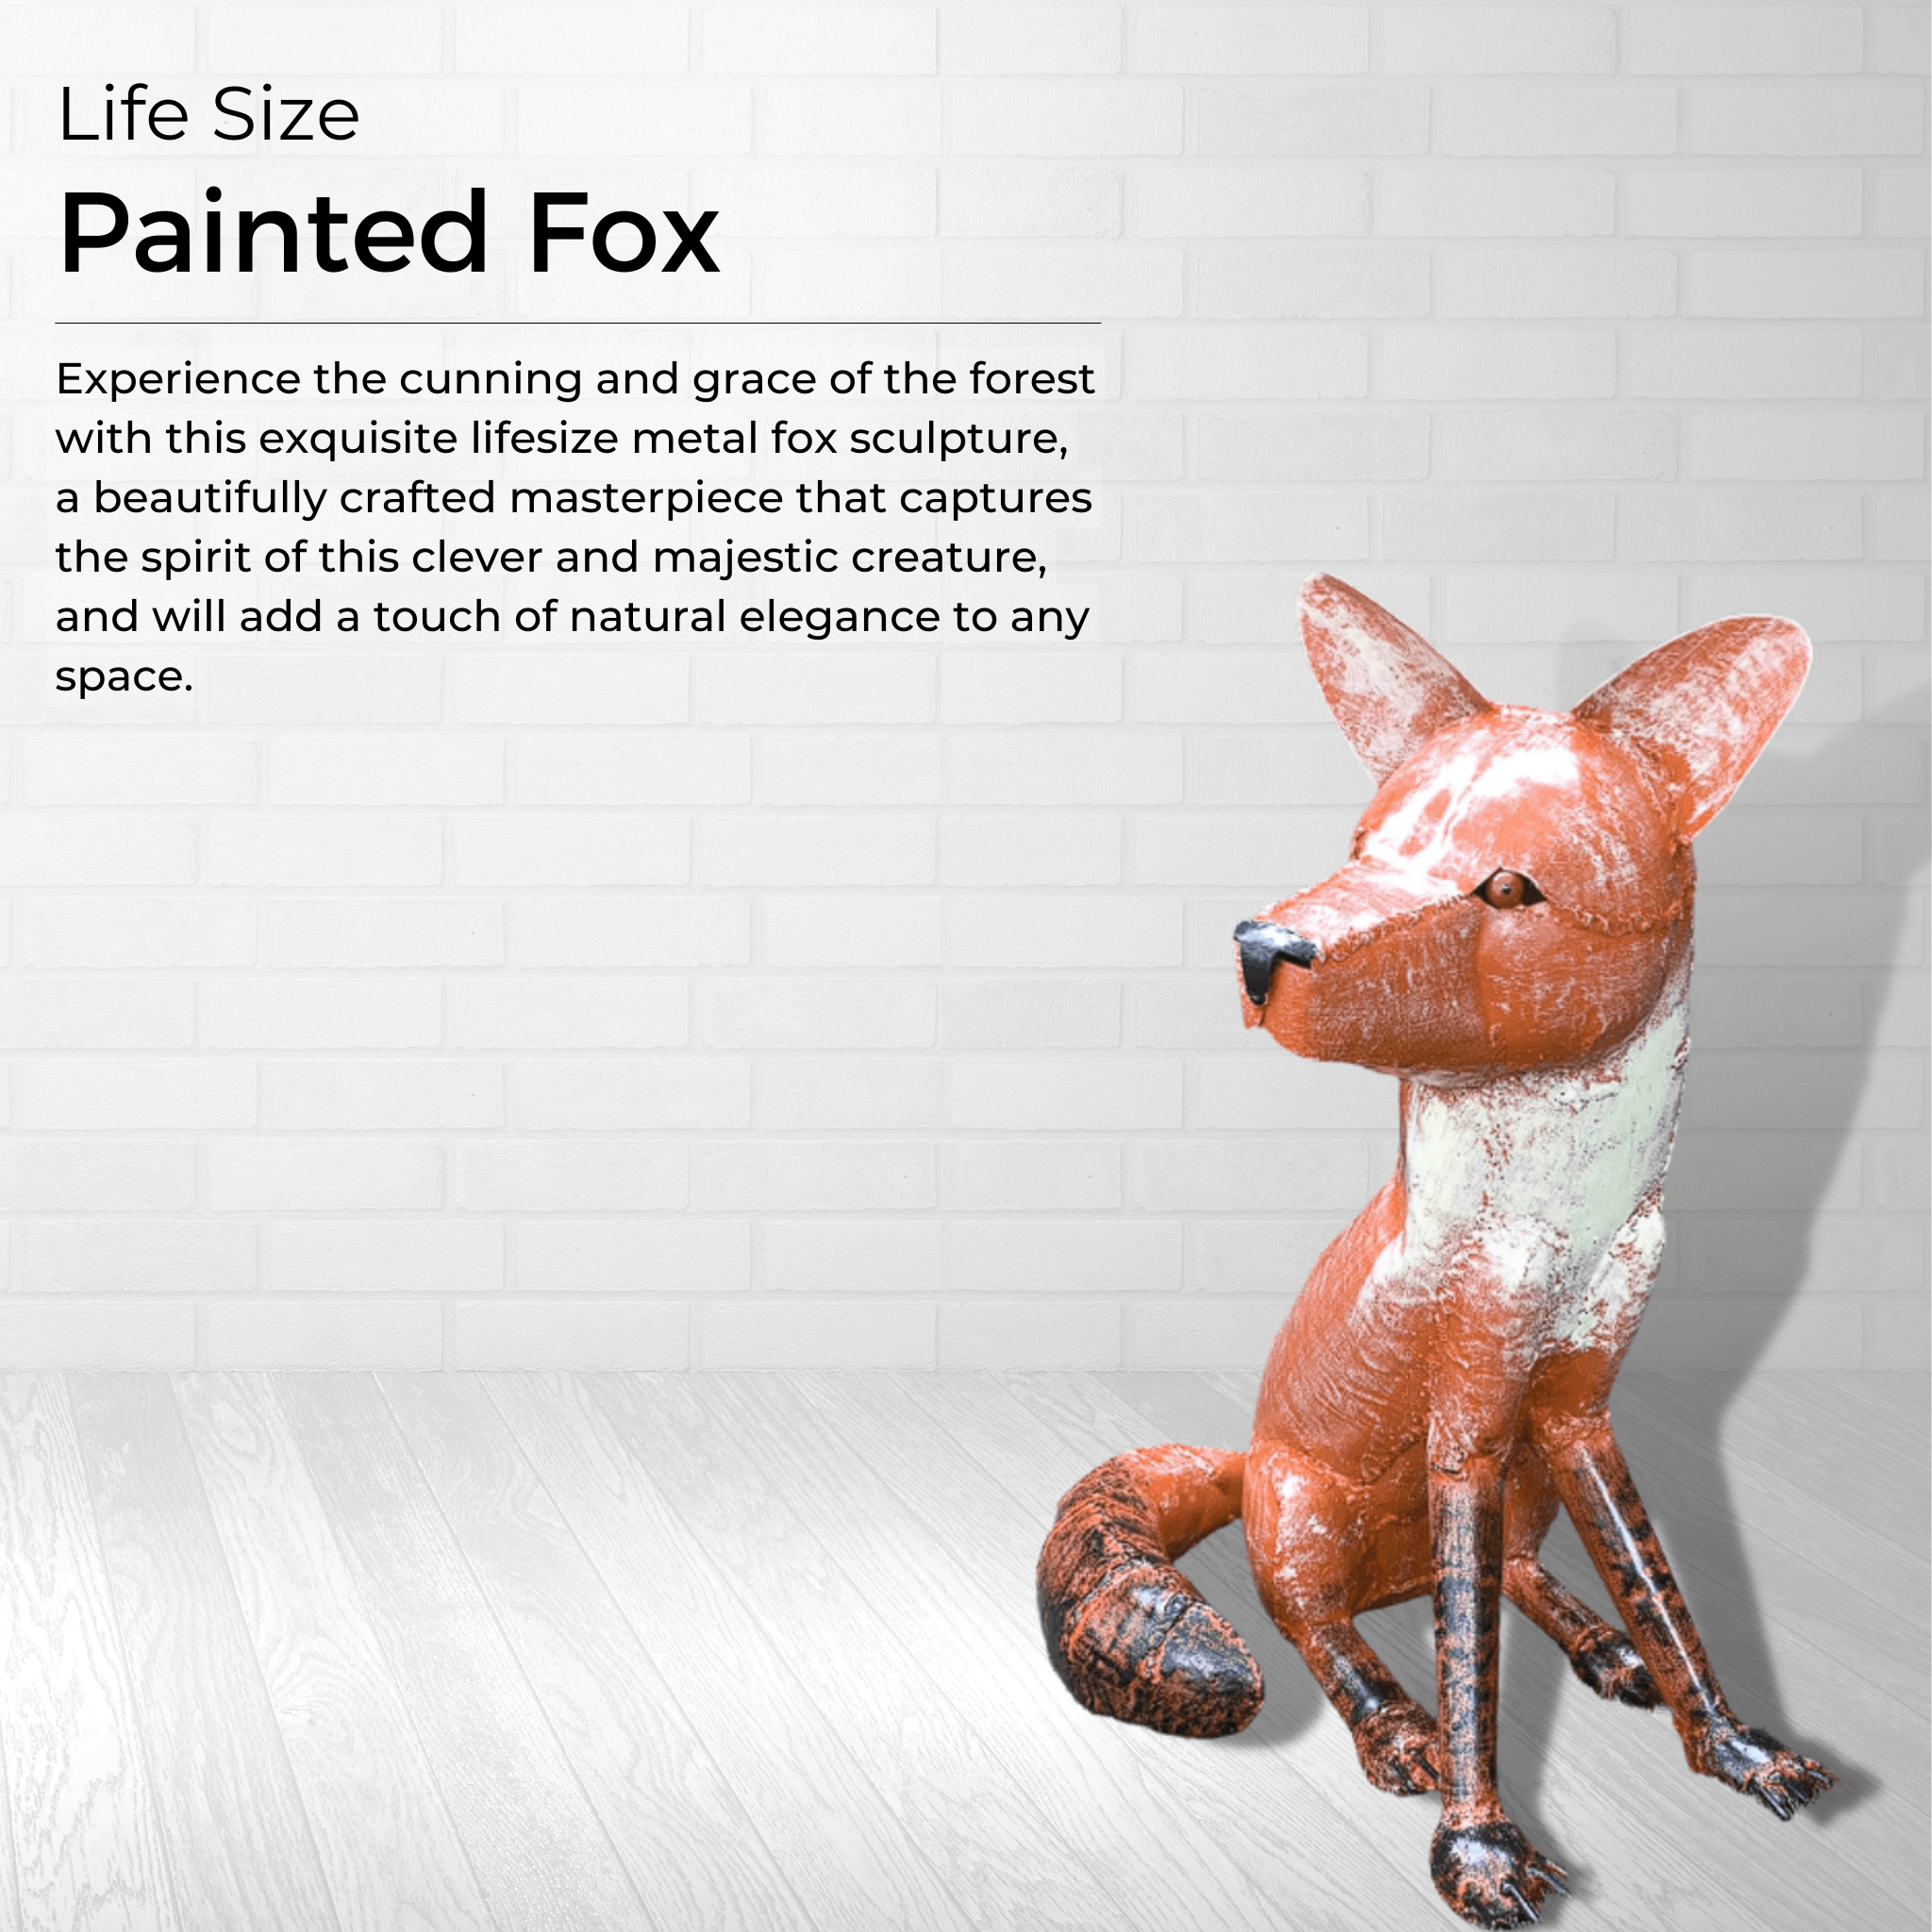 Painted Fox - Pangea Sculptures